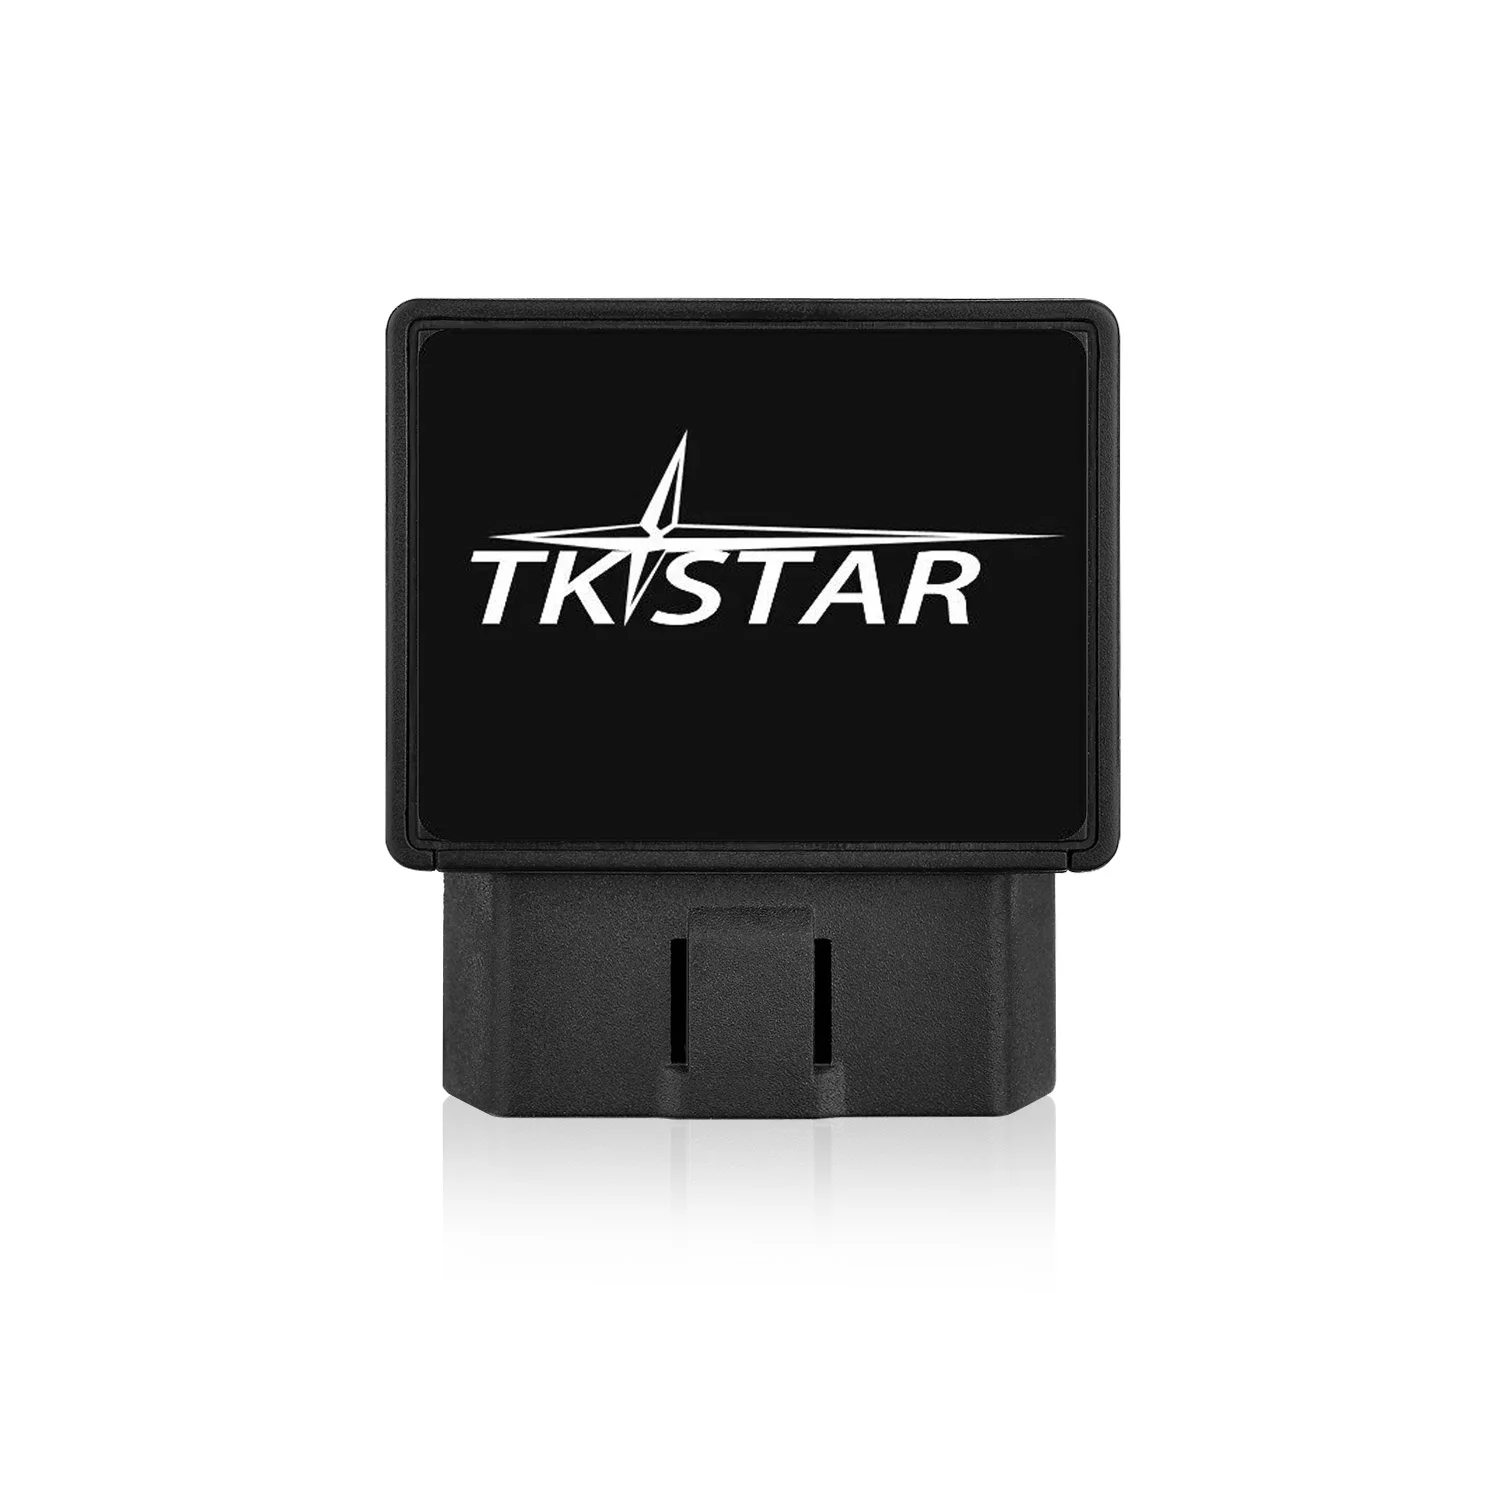 TKSTAR GT02 A GPS Tracker Localizador vehículo en Tiempo Real   Localizador GPS/gsm/GPRS/SMS Localizador antirrobo Coche Moto Bicicleta